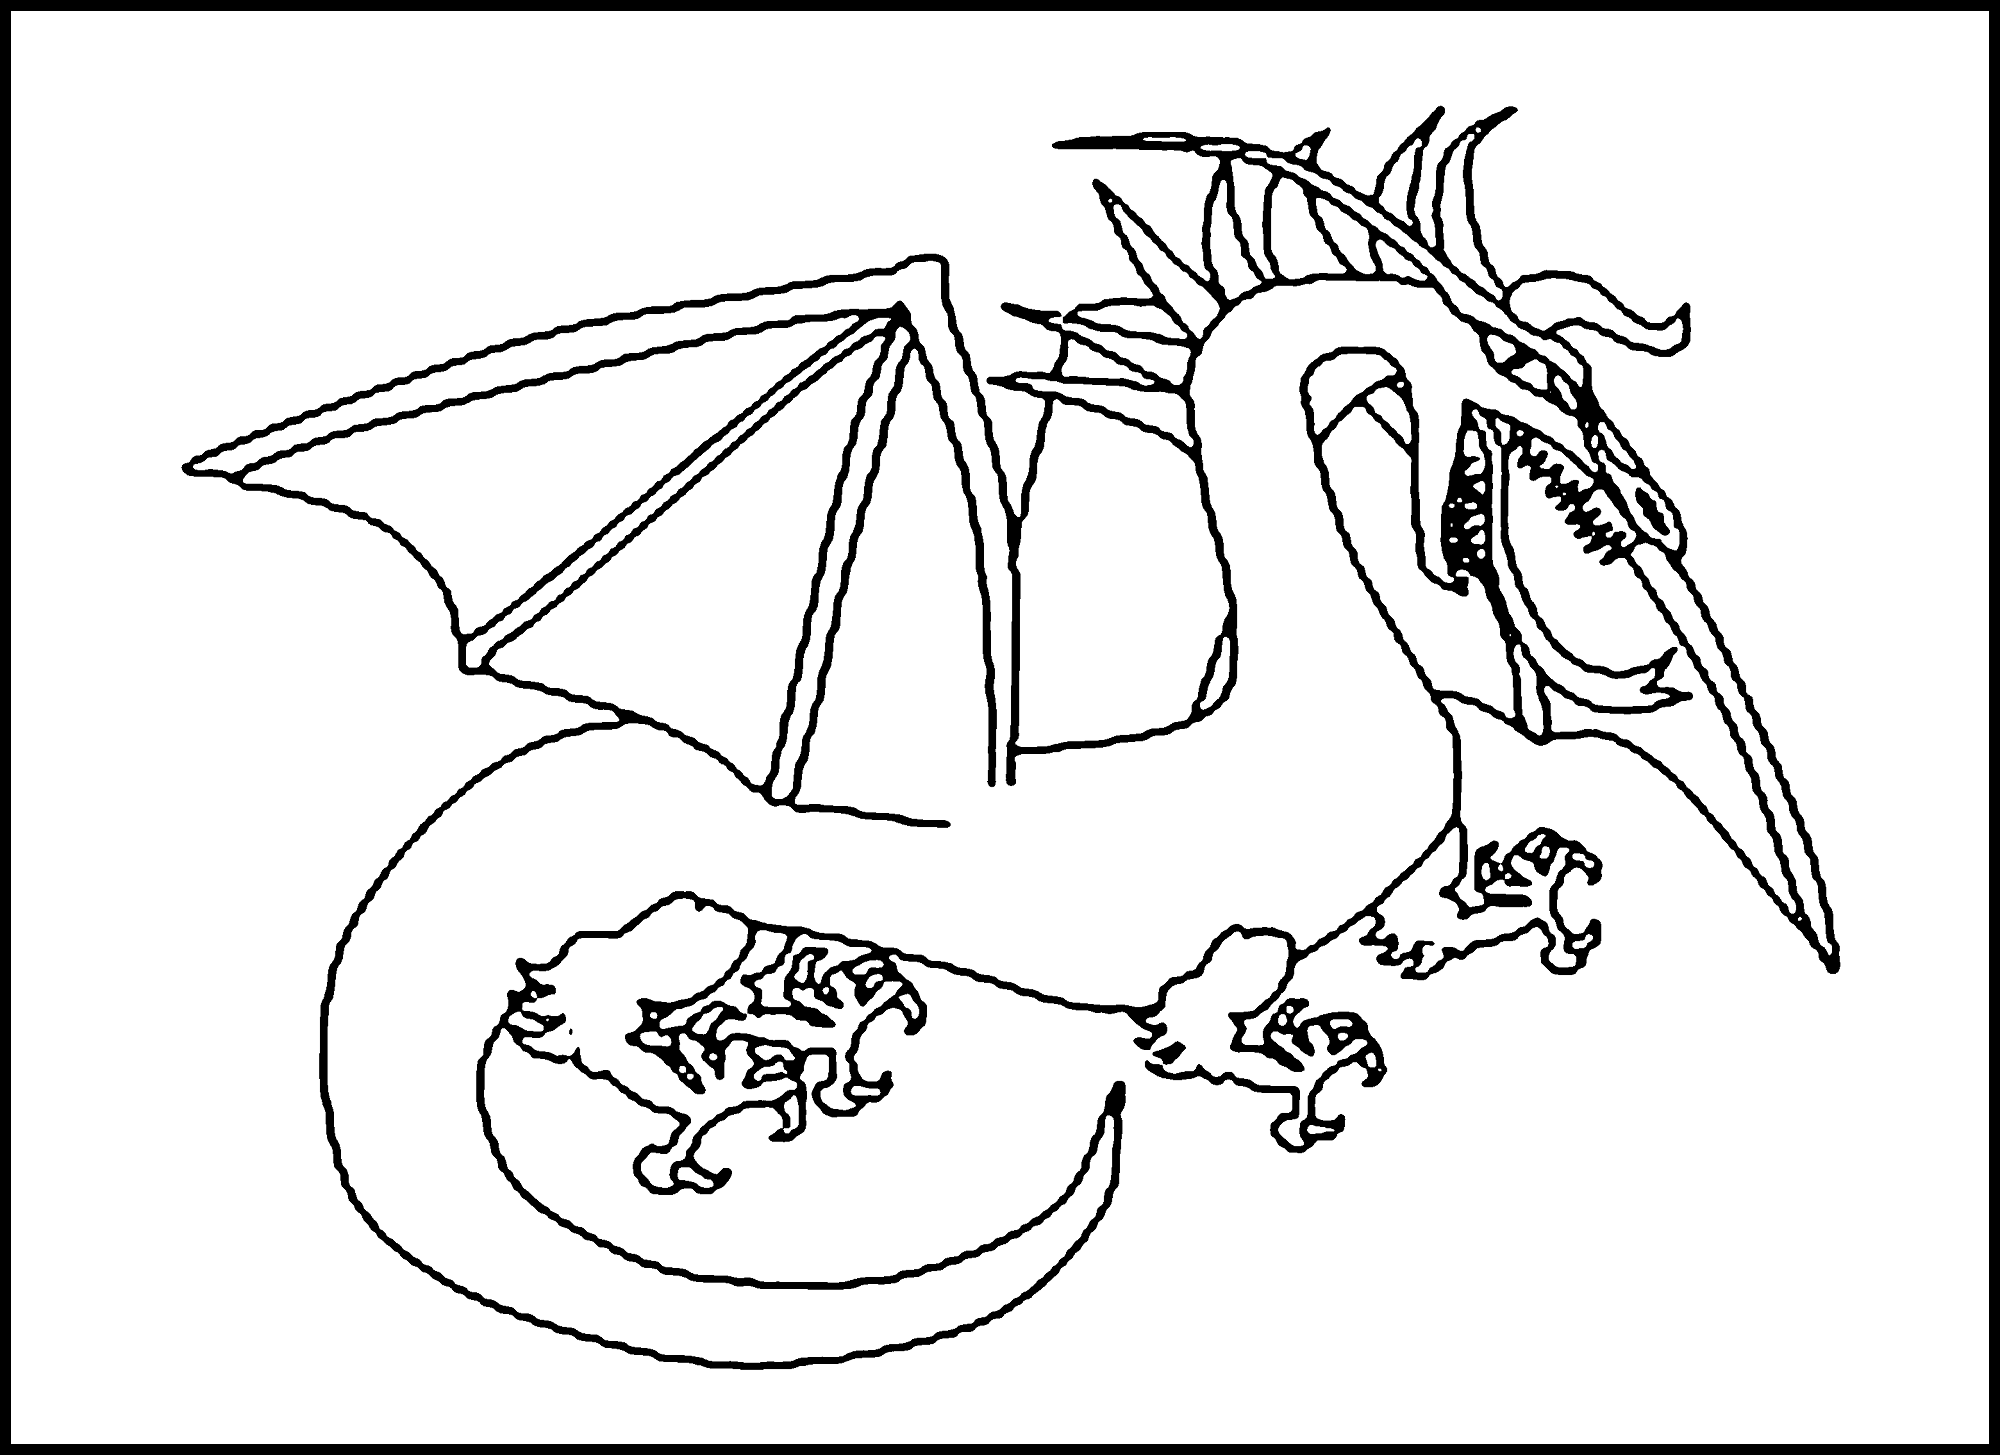 dragon coloring pics dragon coloring pages coloringpages1001com dragon coloring pics 